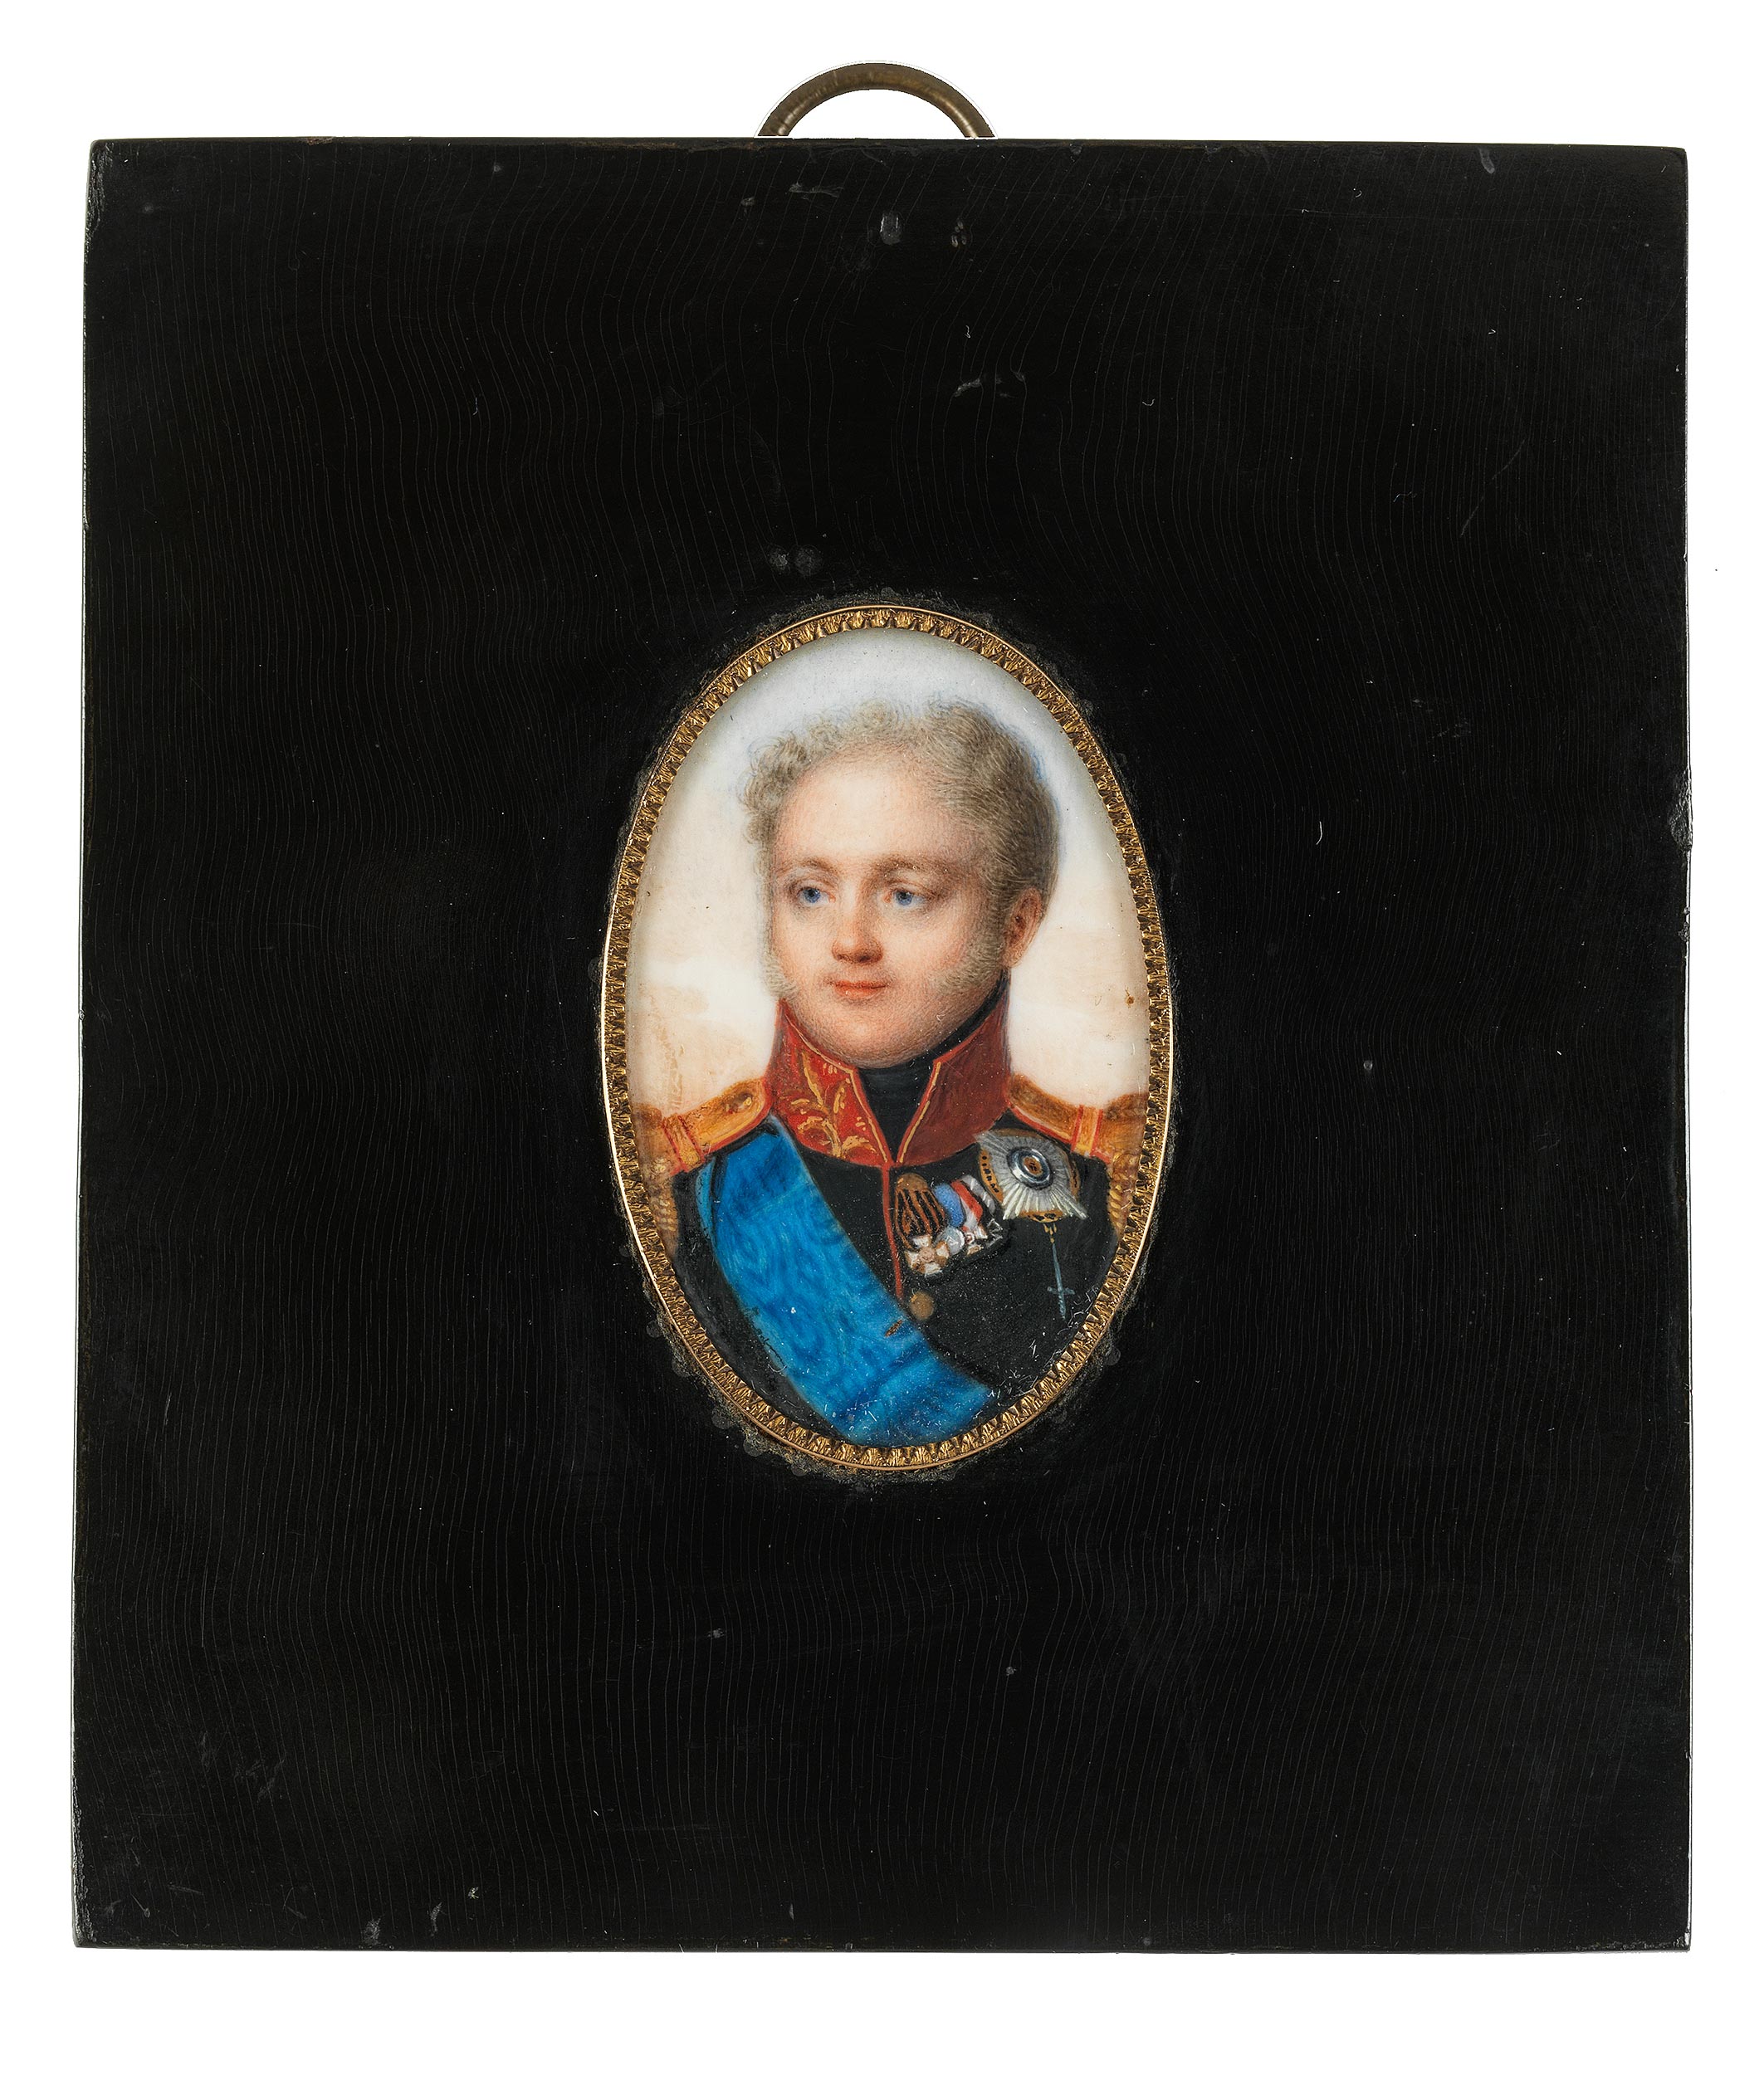 Jean Henri Benner,1776 – 1829